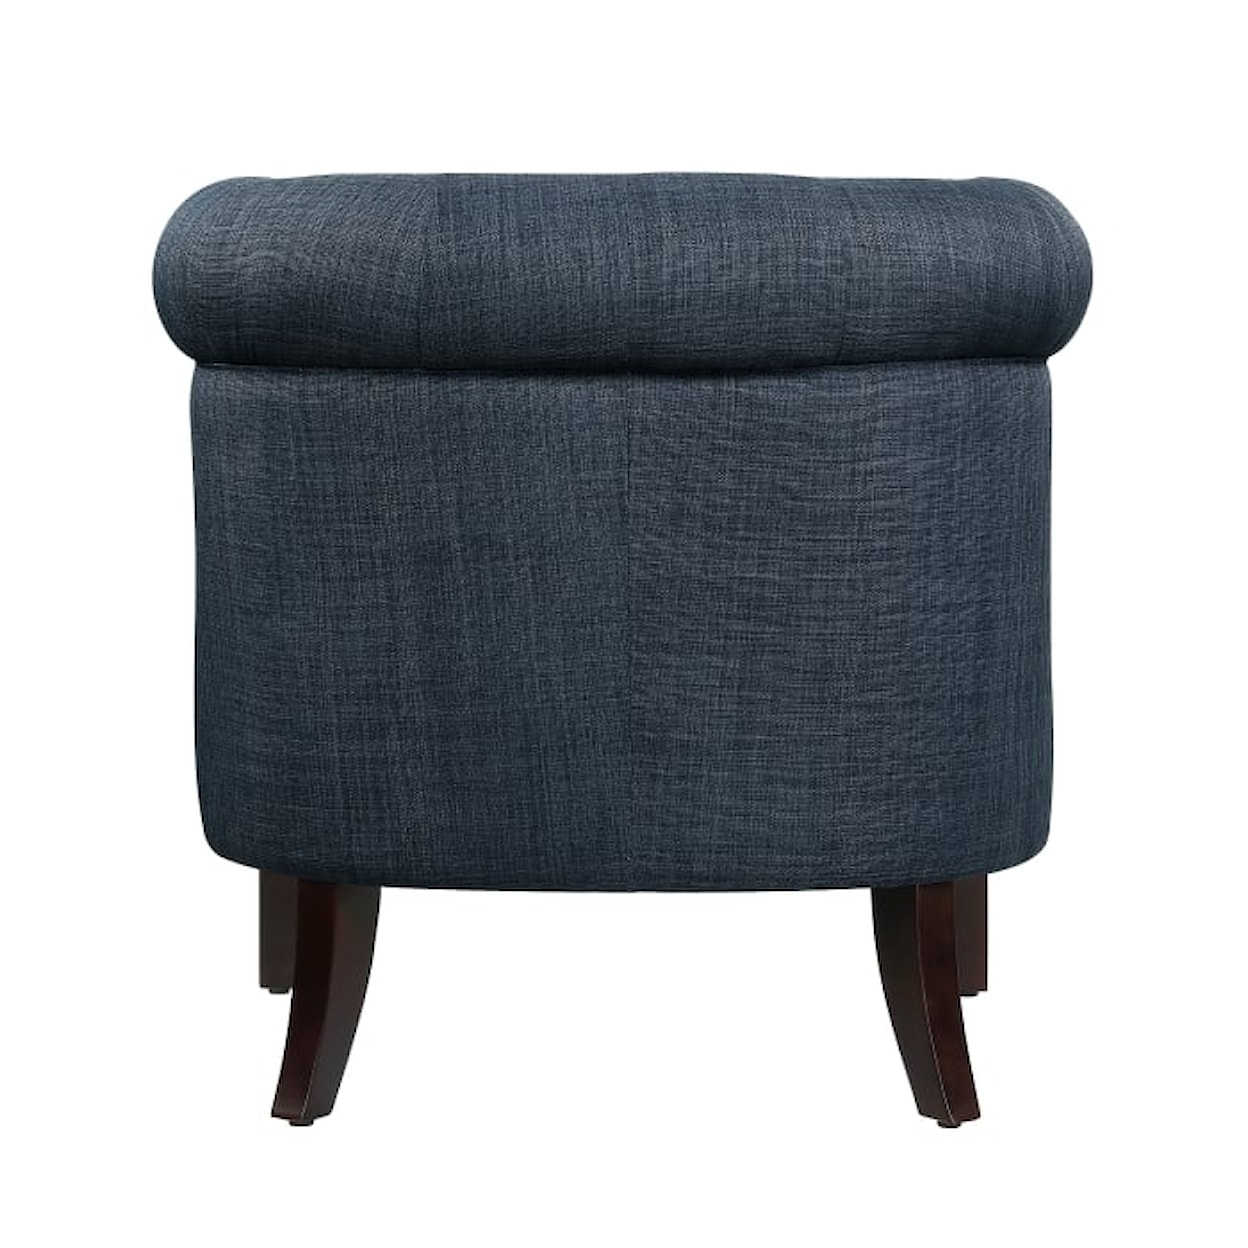 Homelegance Furniture Karlock Accent Chair